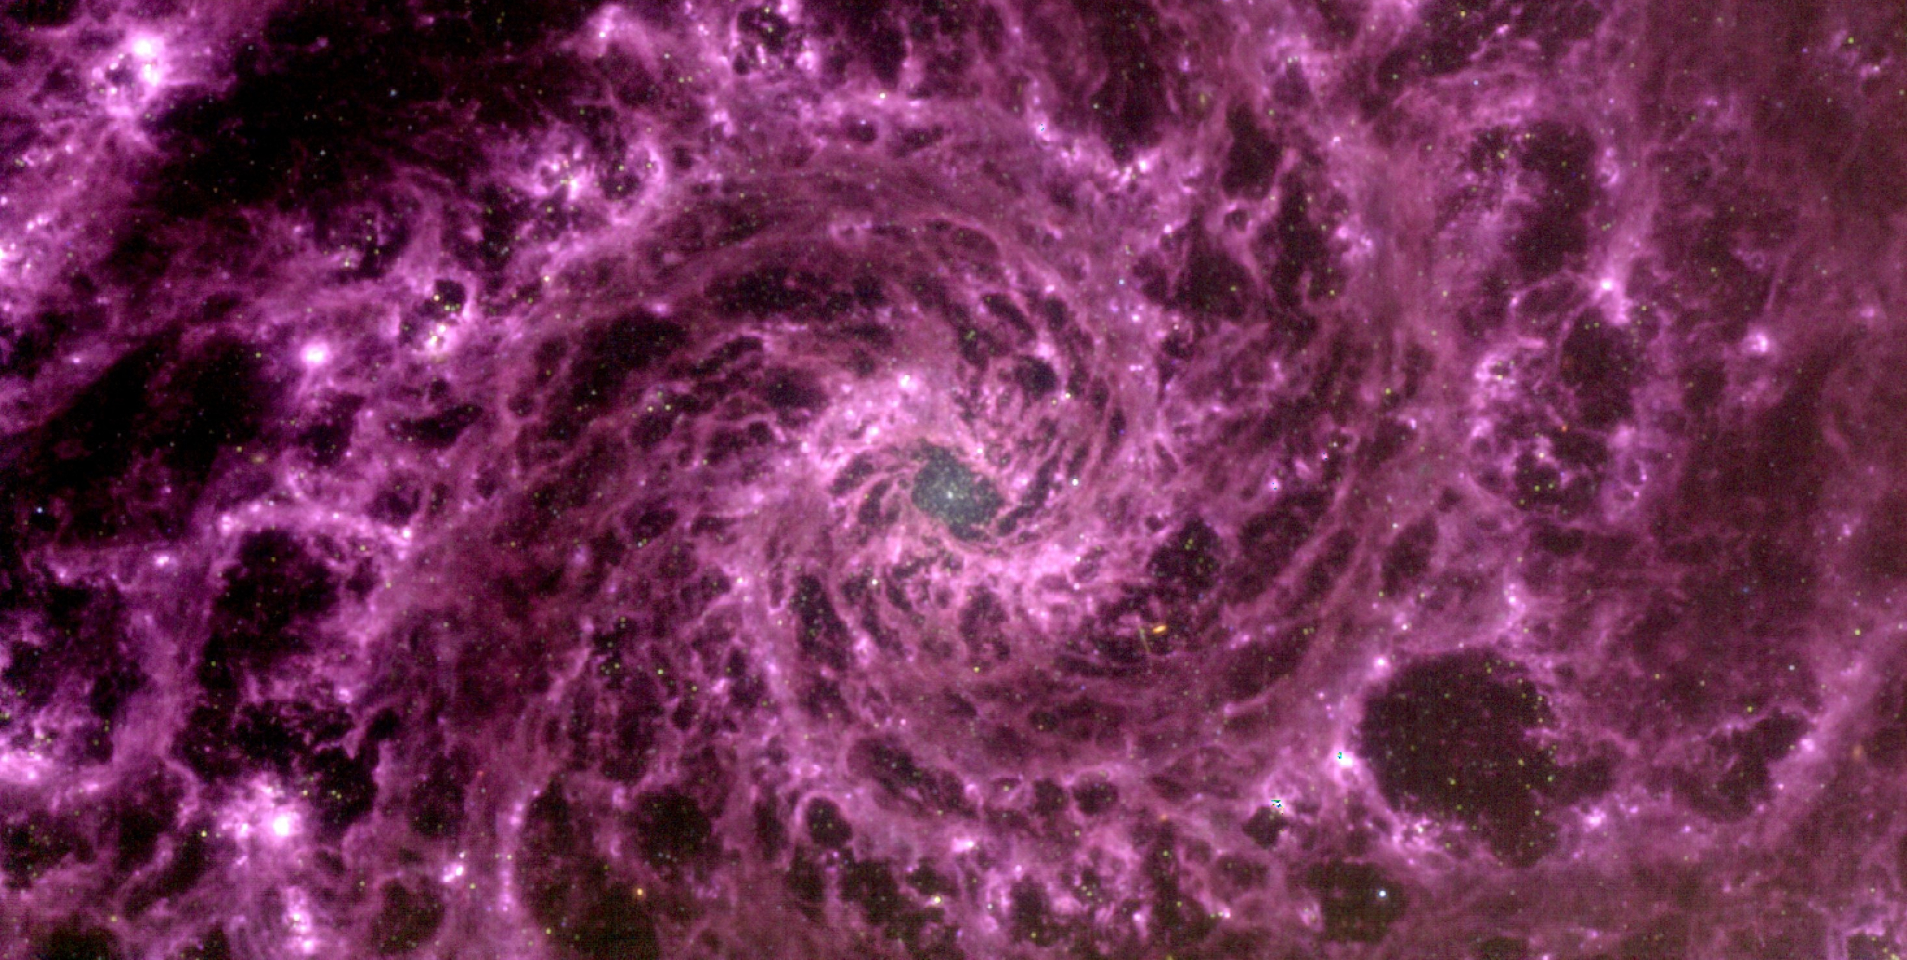 Snimka galaksije M74/NGC628 kako ju je snimio James Webb (NASA, ESA, CSA)